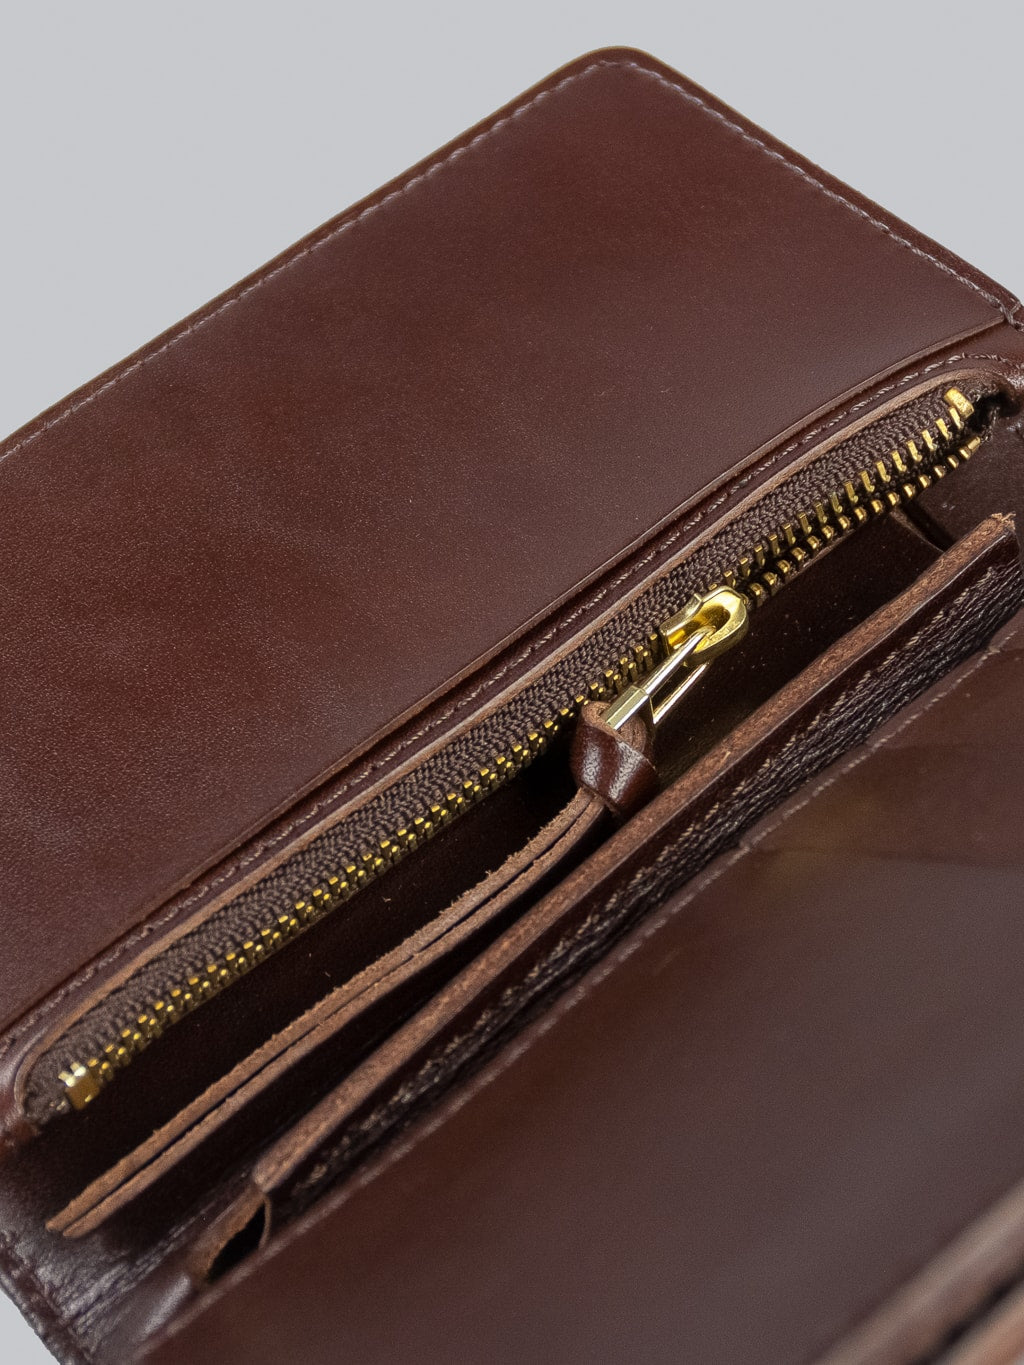 Kobashi Studio middle wallet leather brown brass zipper